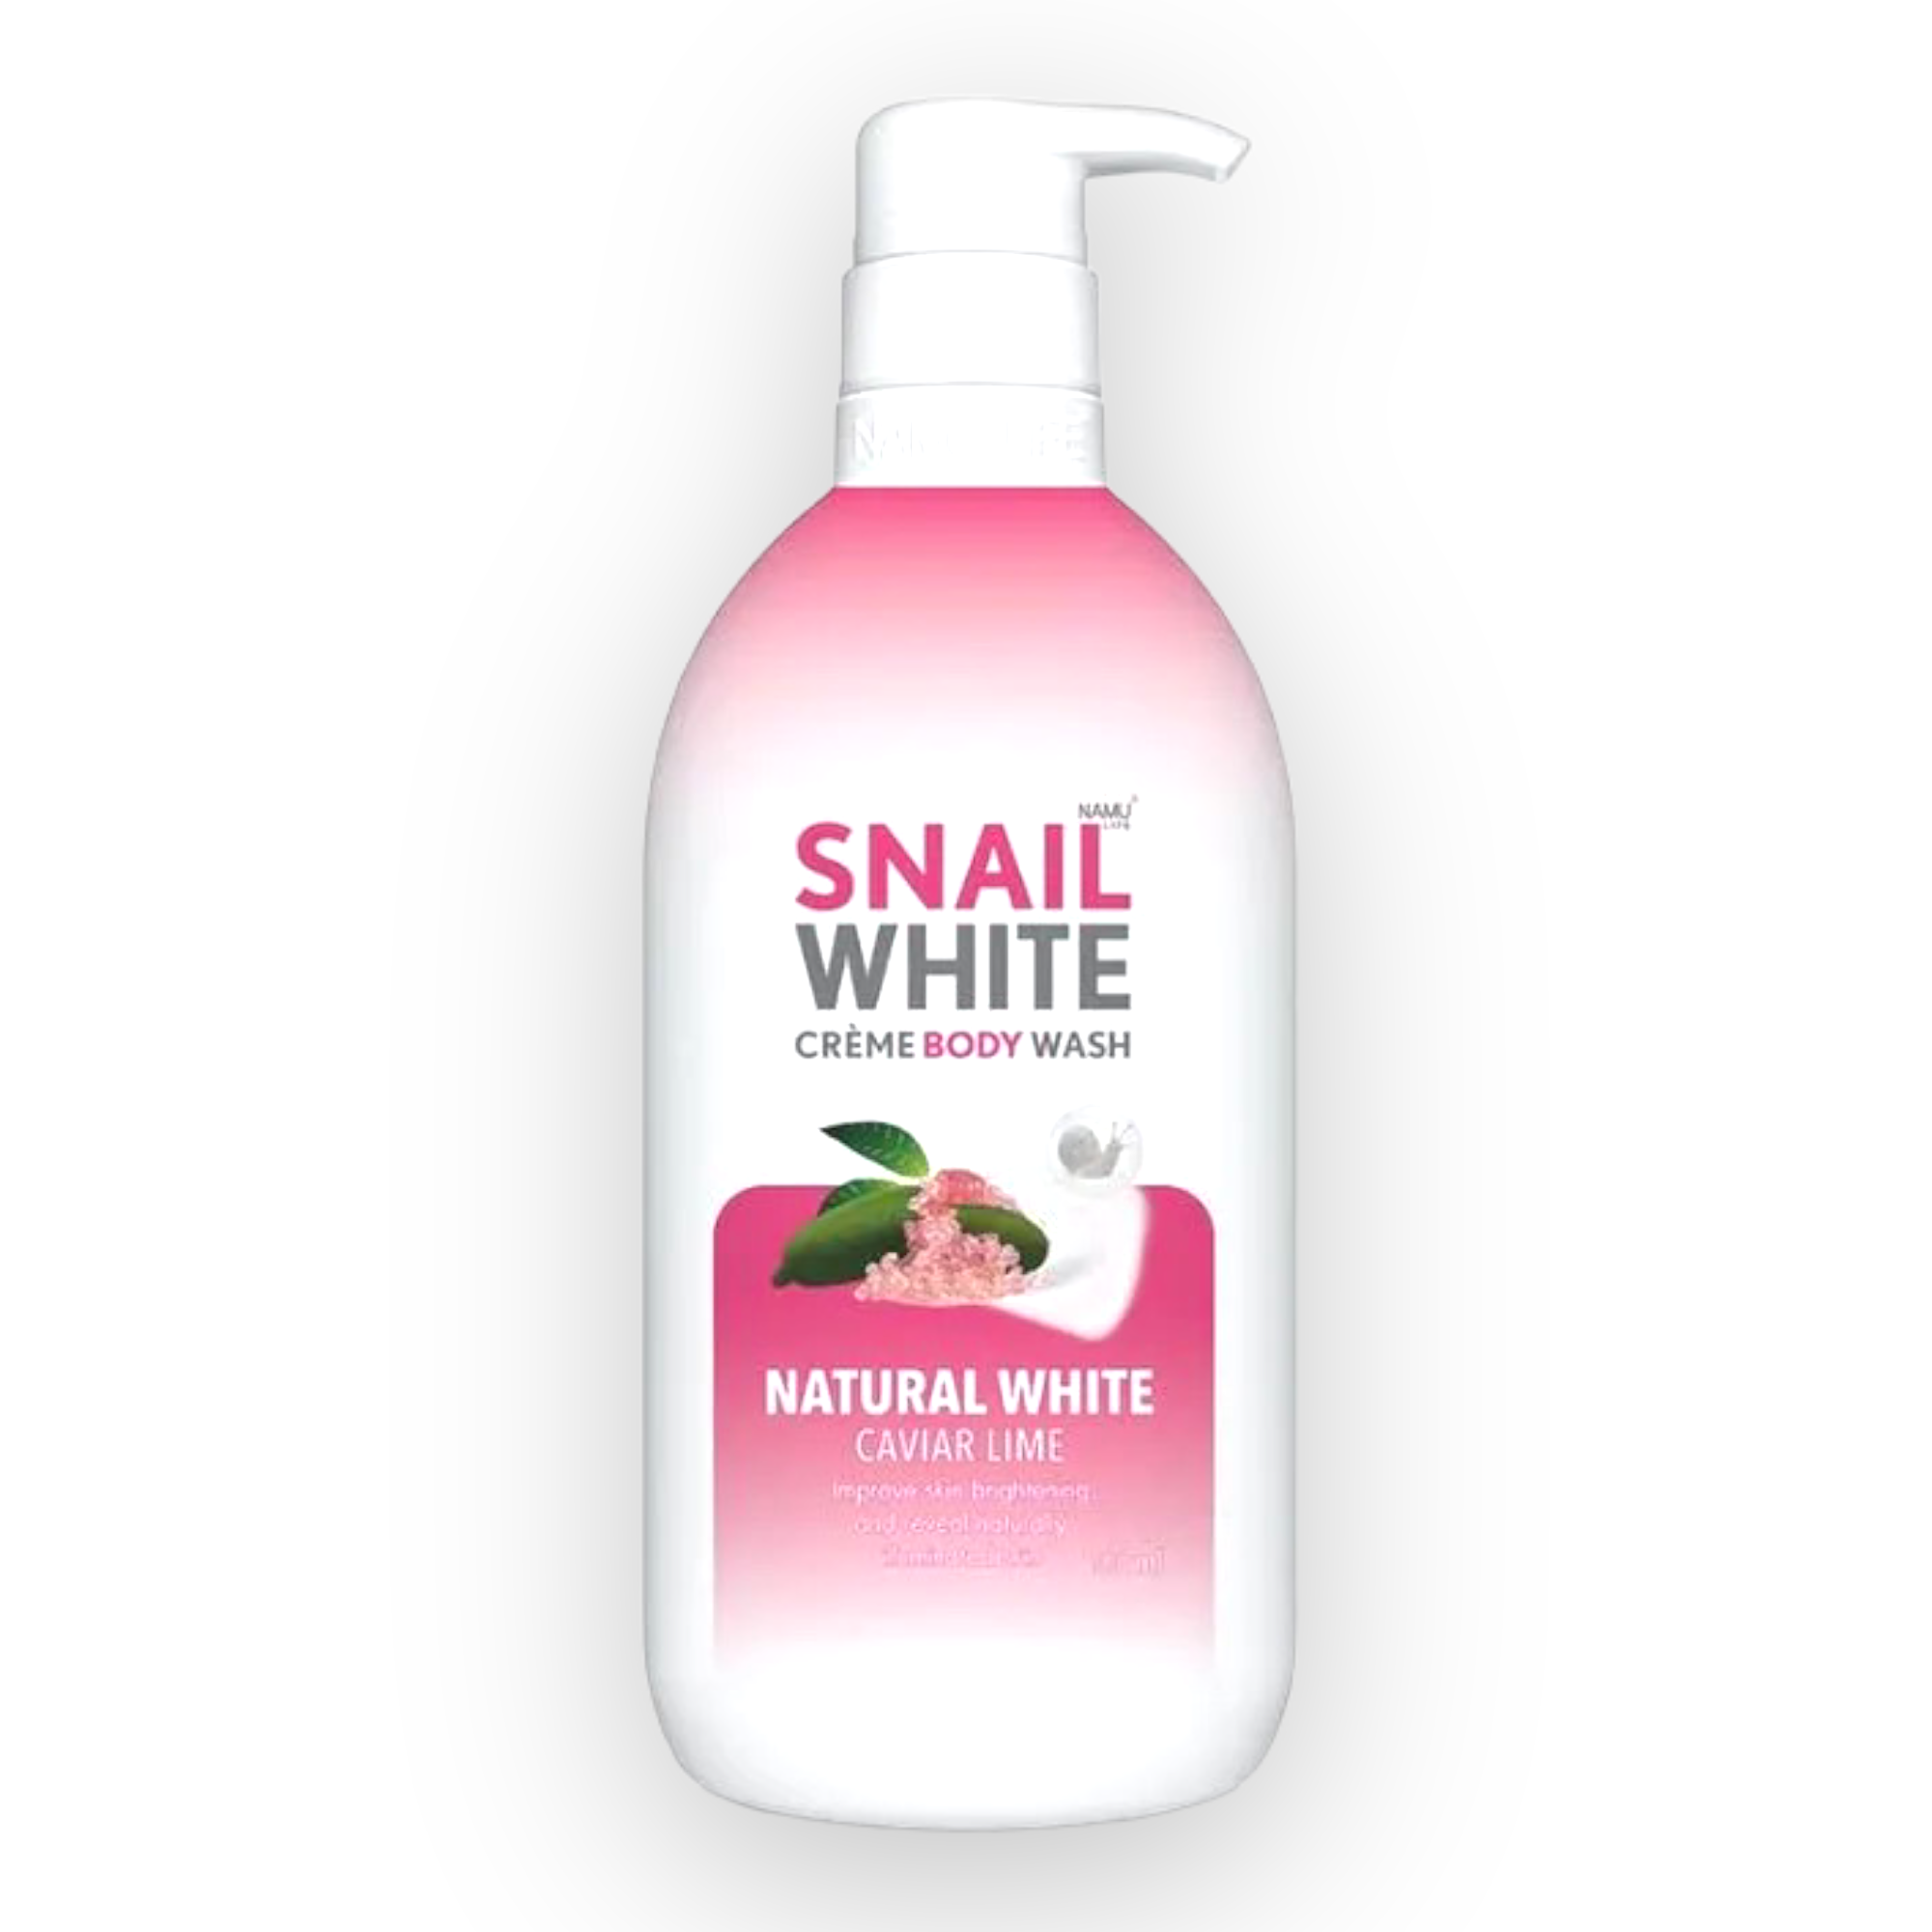 Snailwhite - Crème Body Wash - Natural White Caviar Lime 500ml